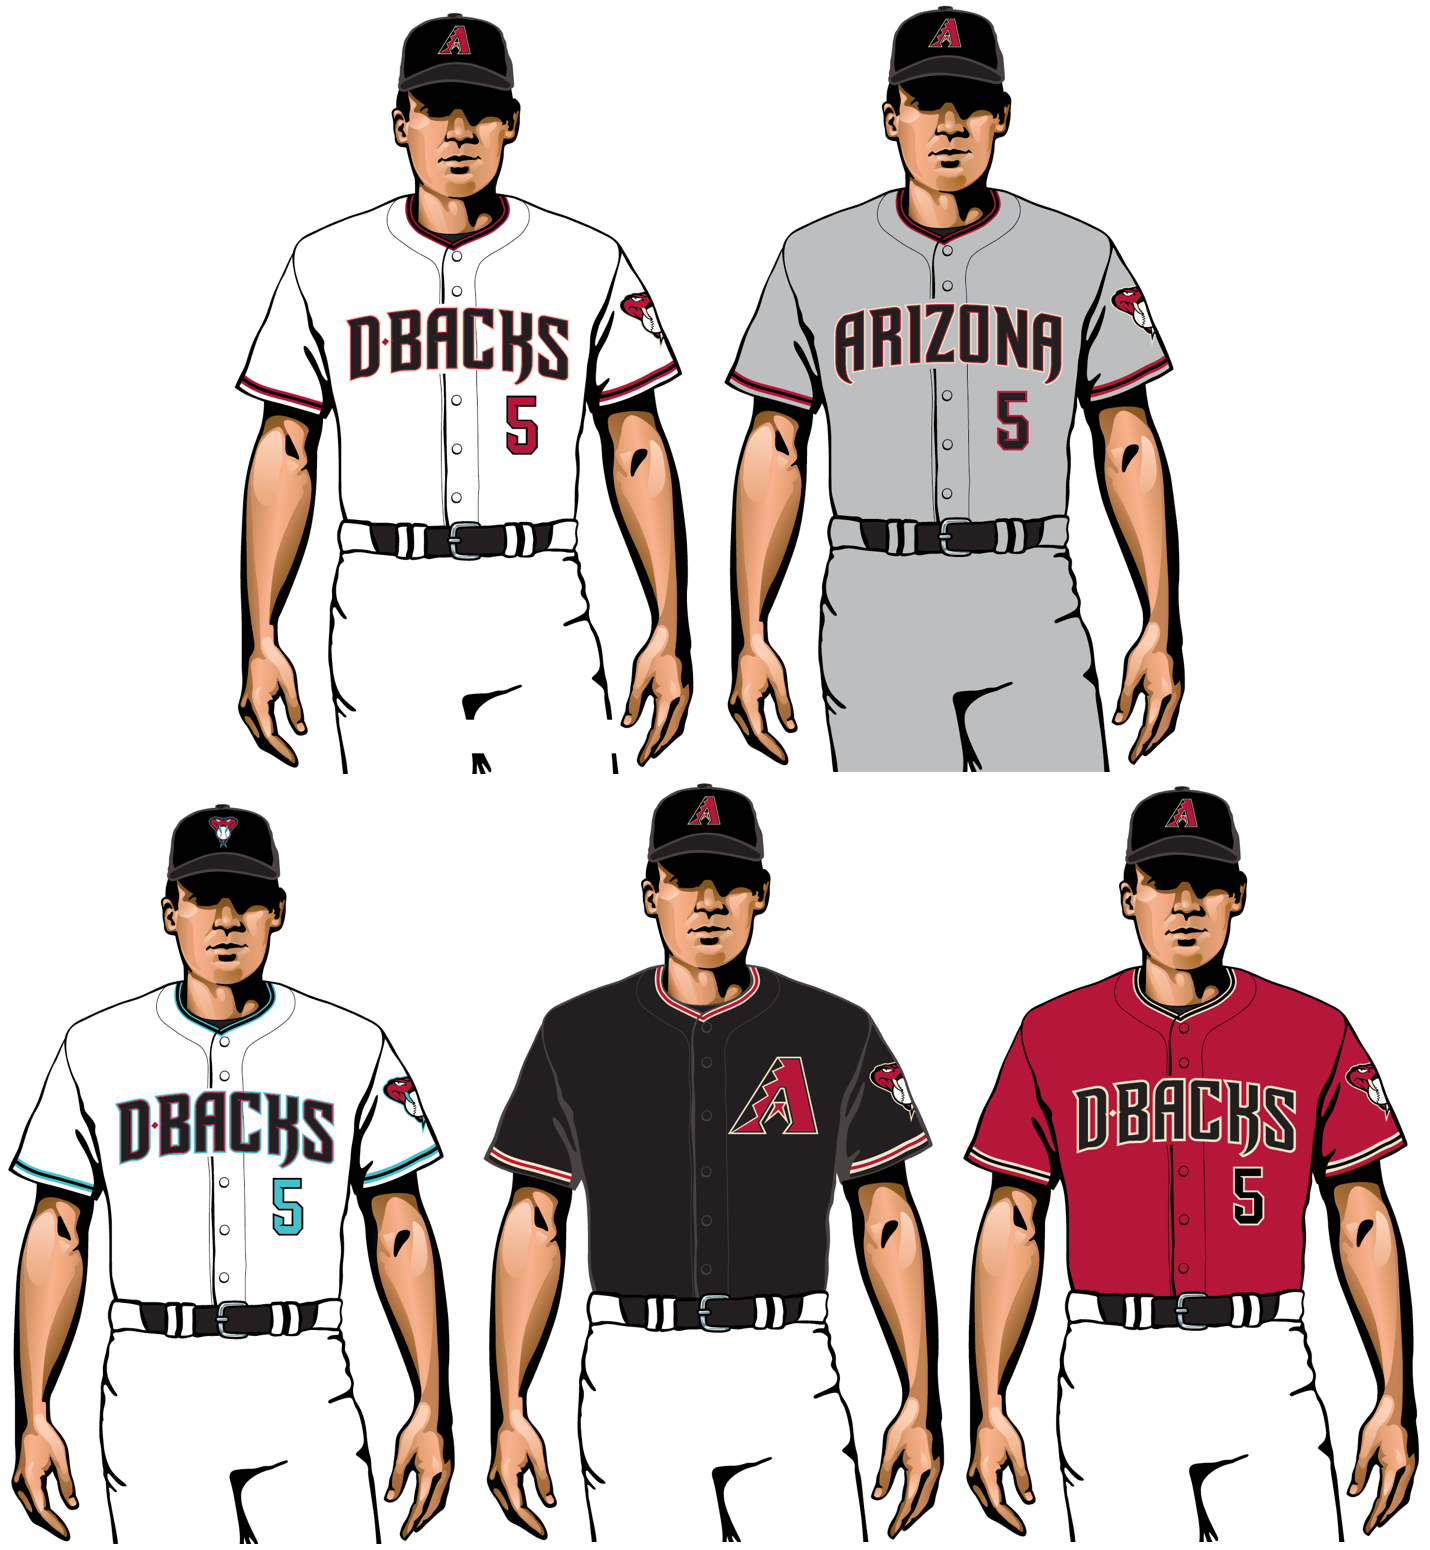 new baseball uniforms 2020